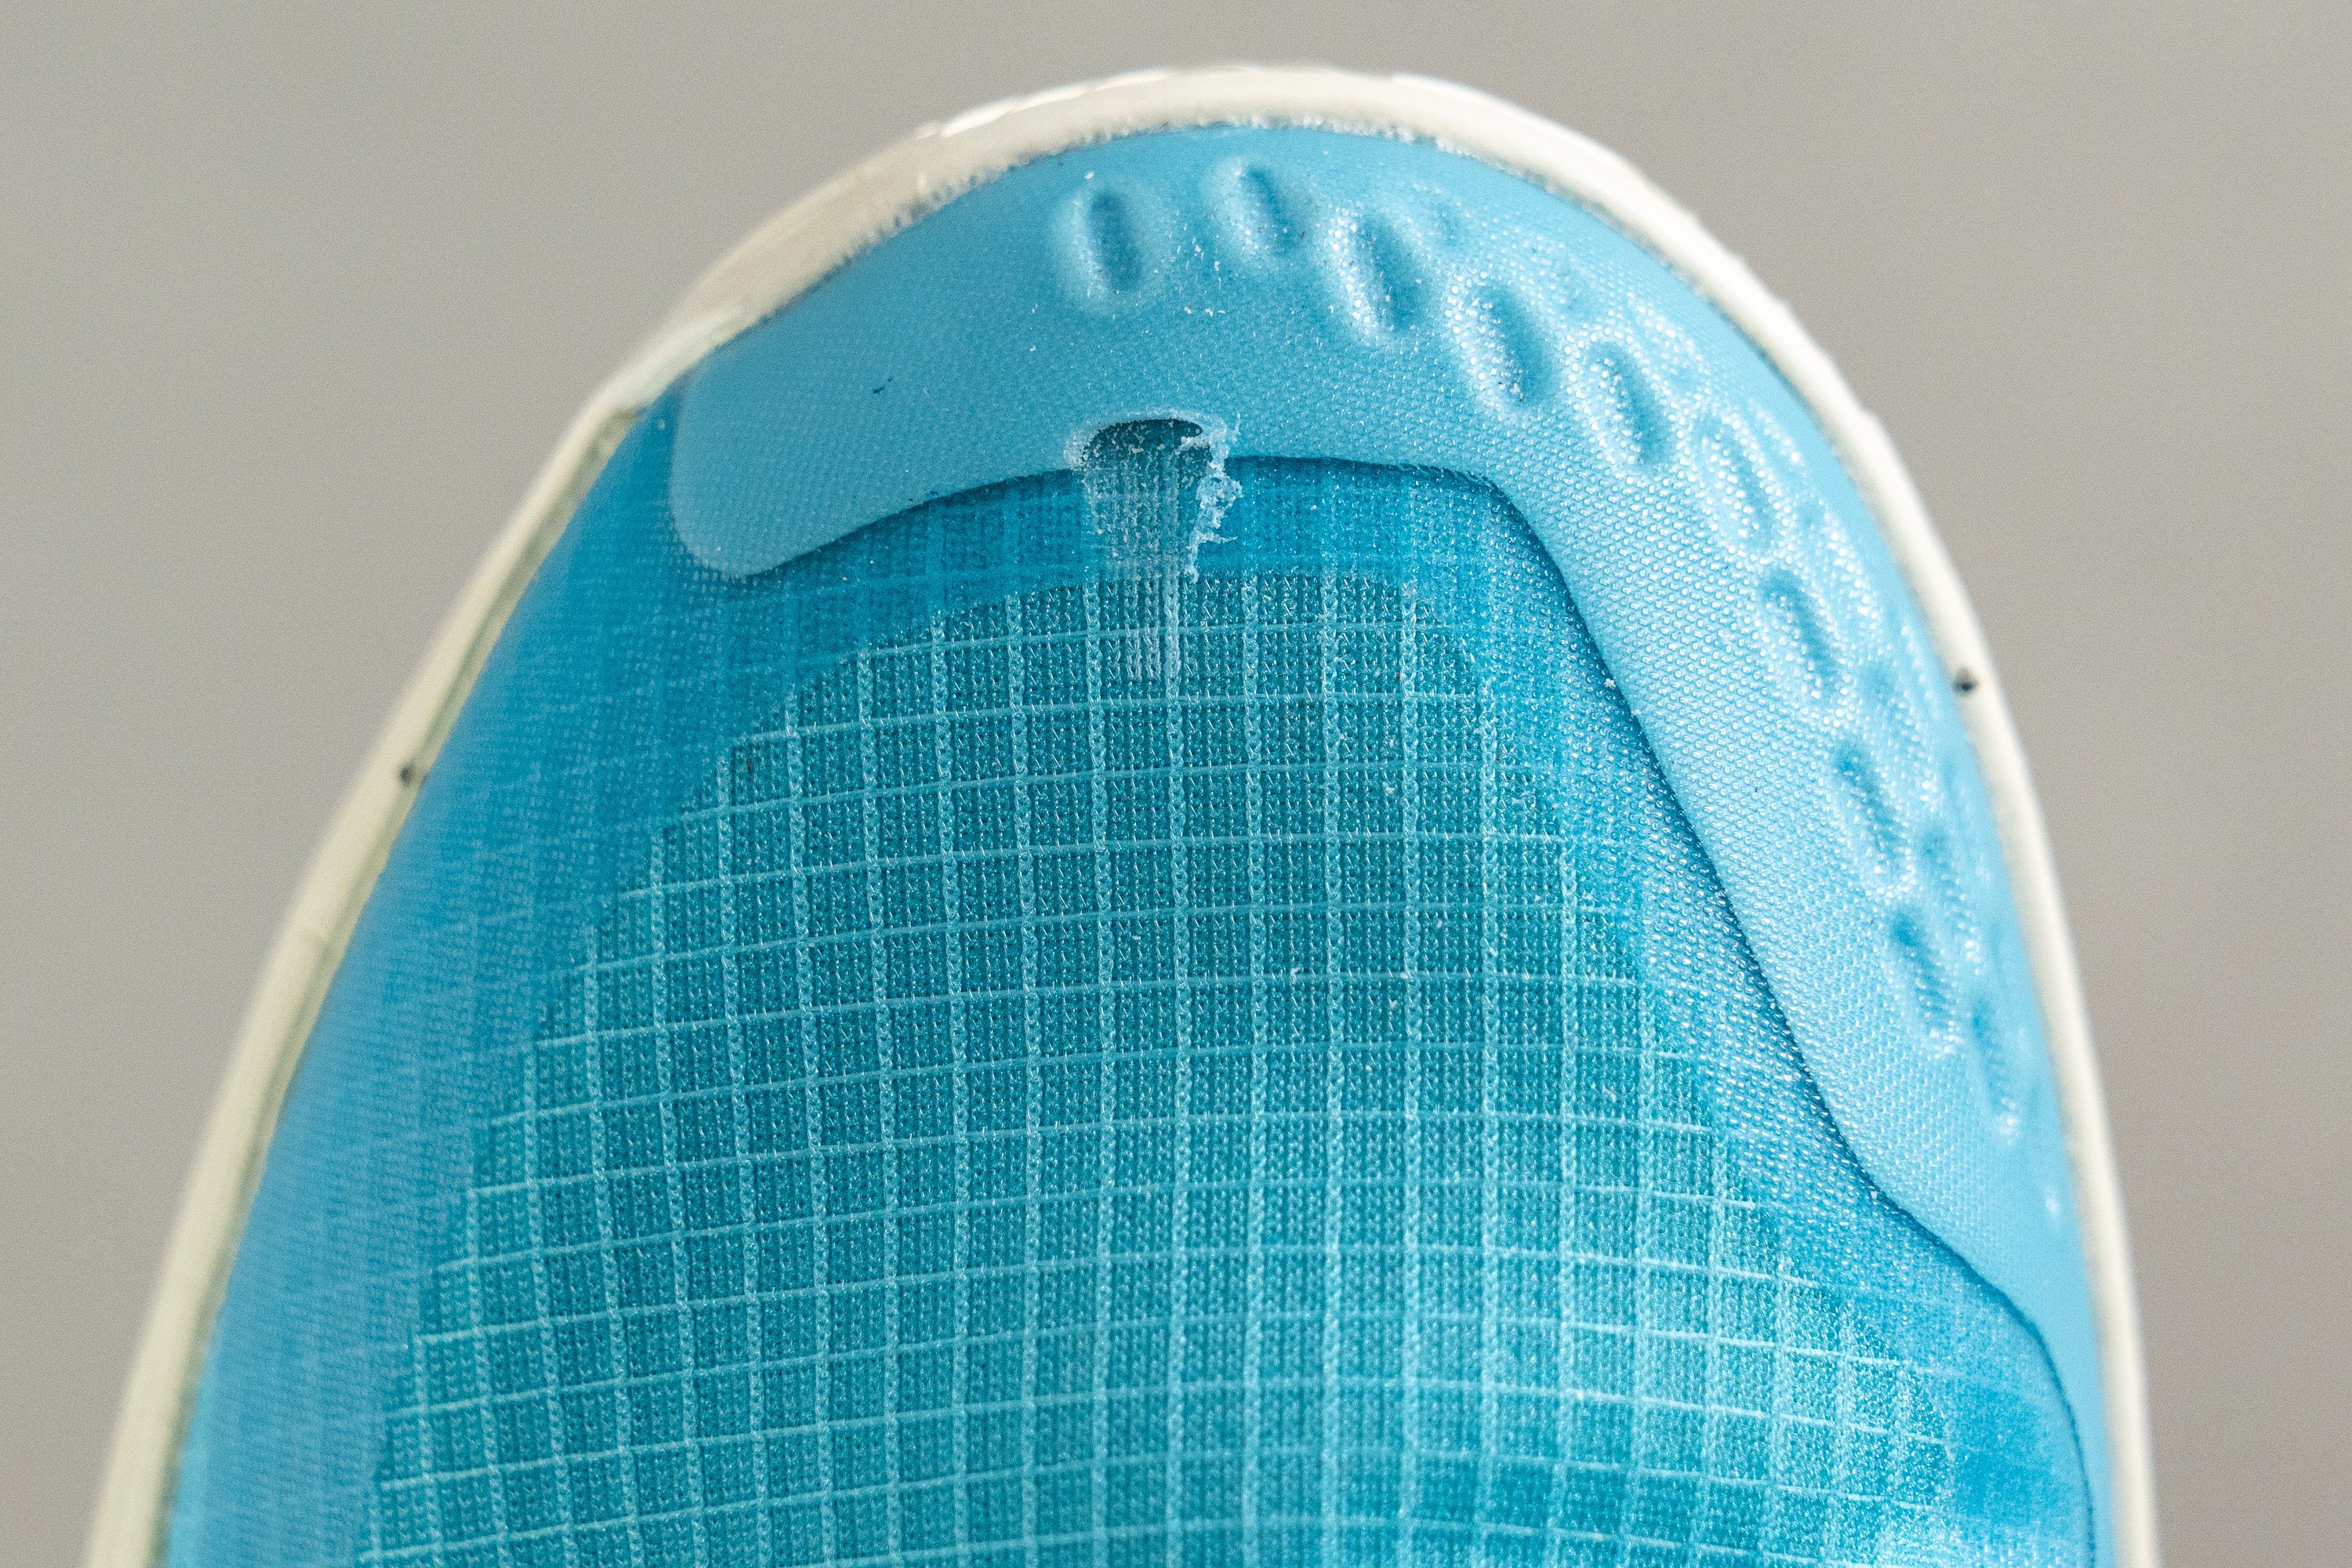 Adidas Adizero Ubersonic 4.1 Toebox durability